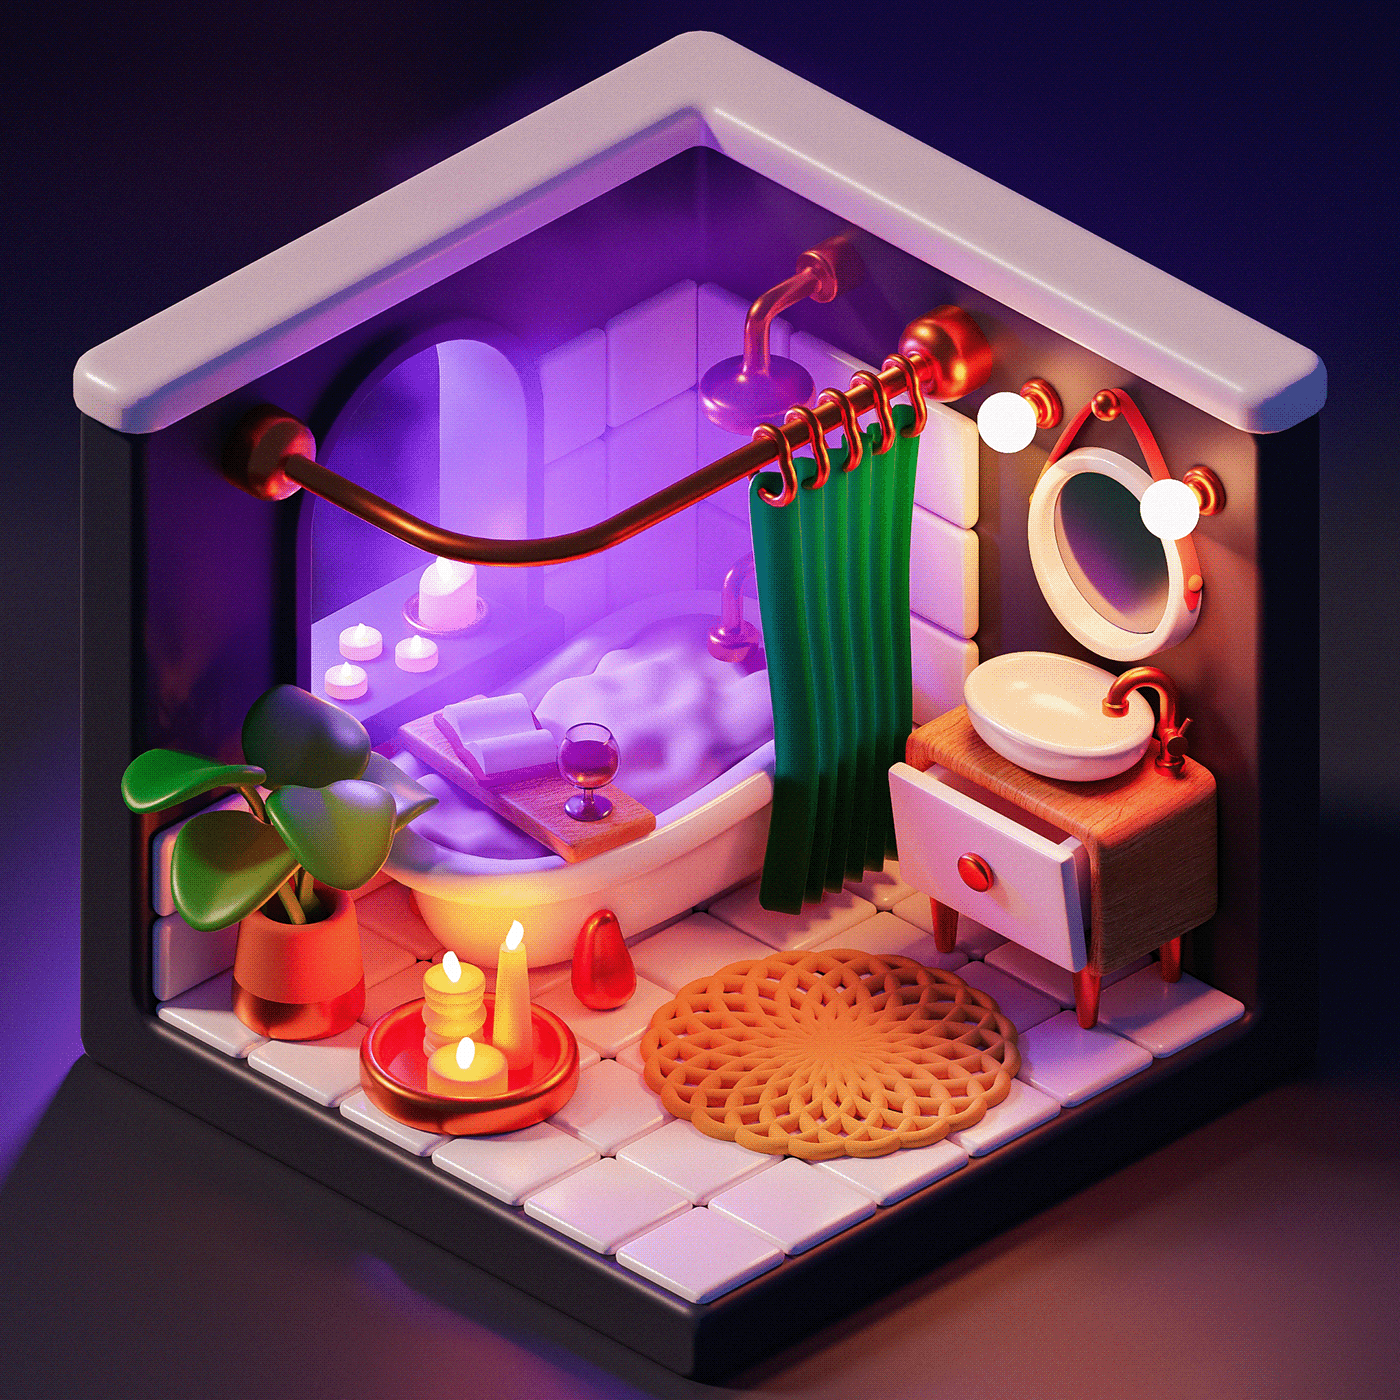 Cozy rooms on Behance